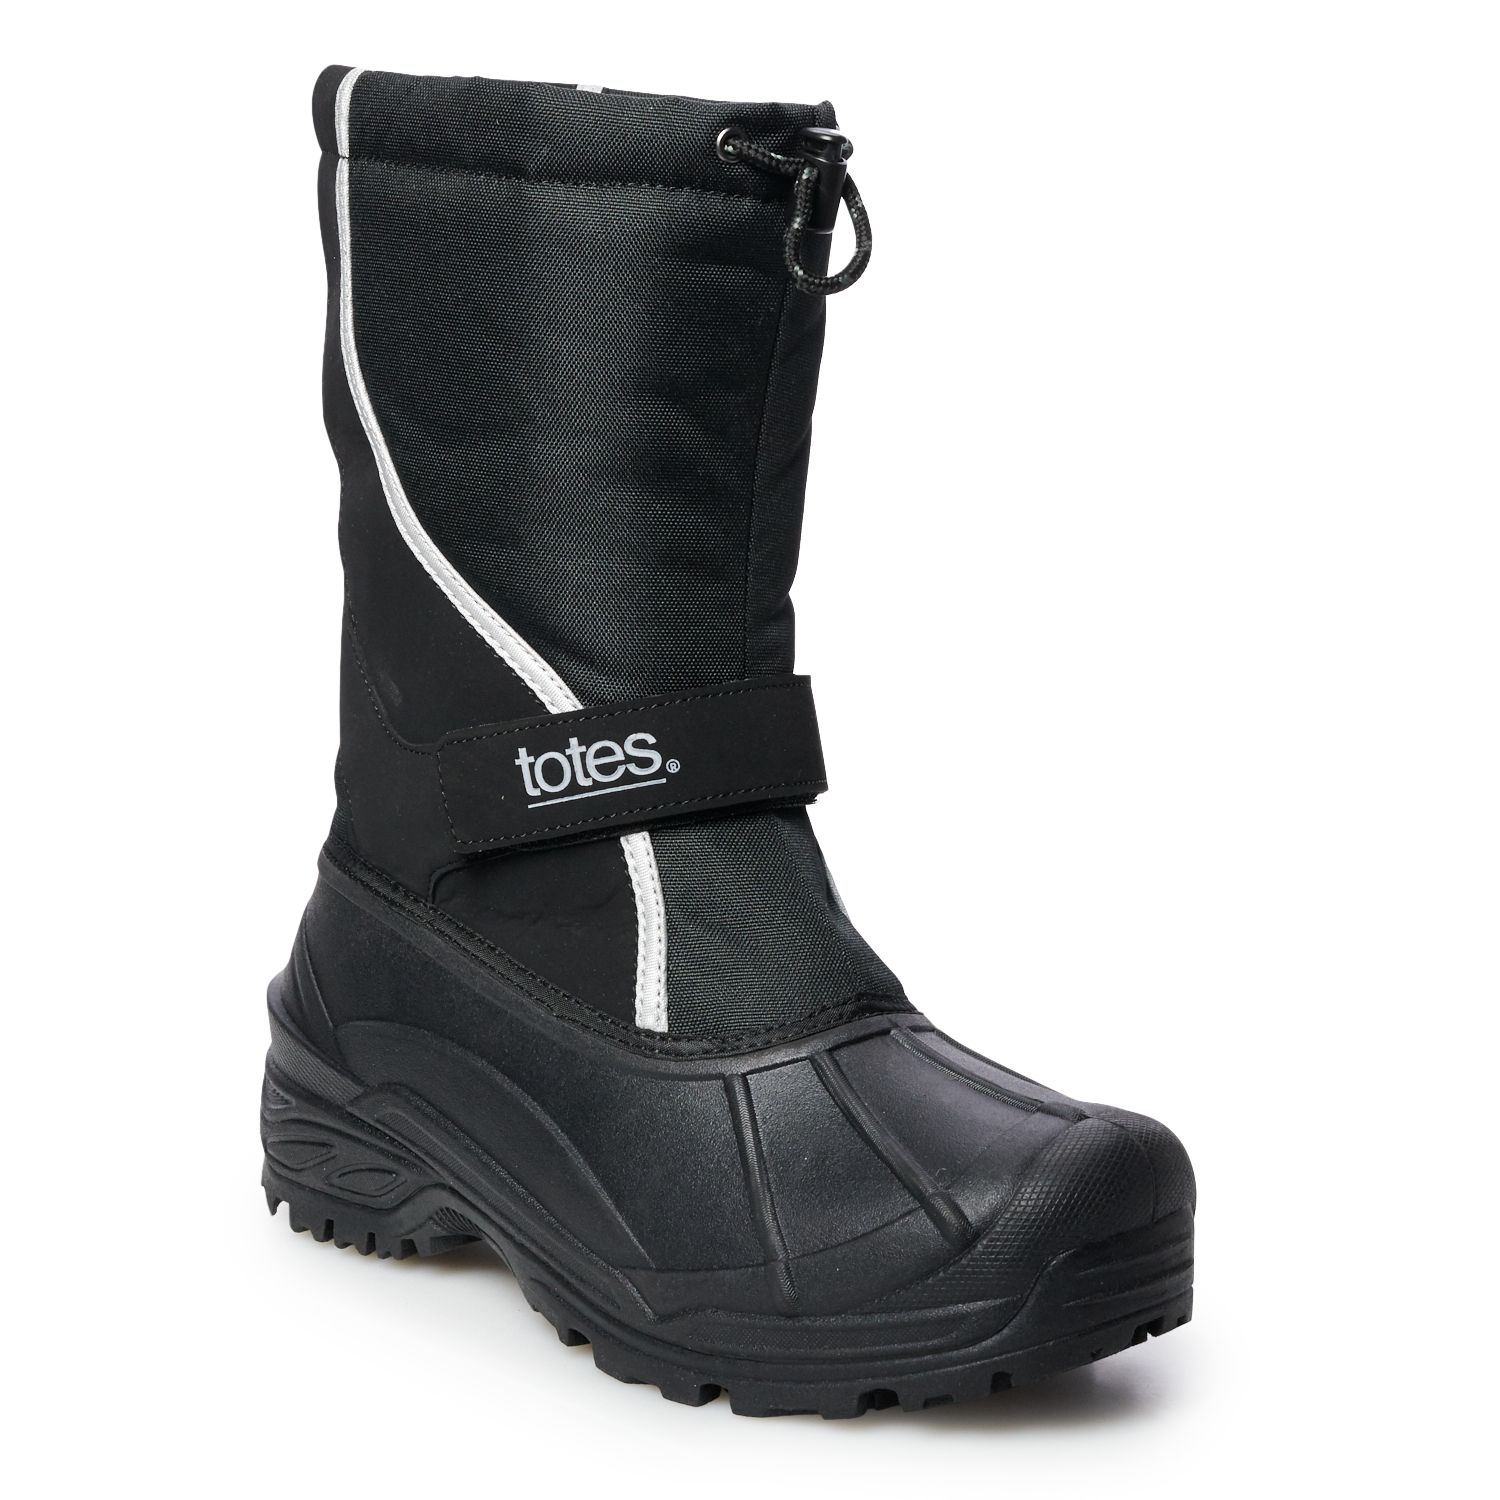 kohls totes winter boots Online Sale